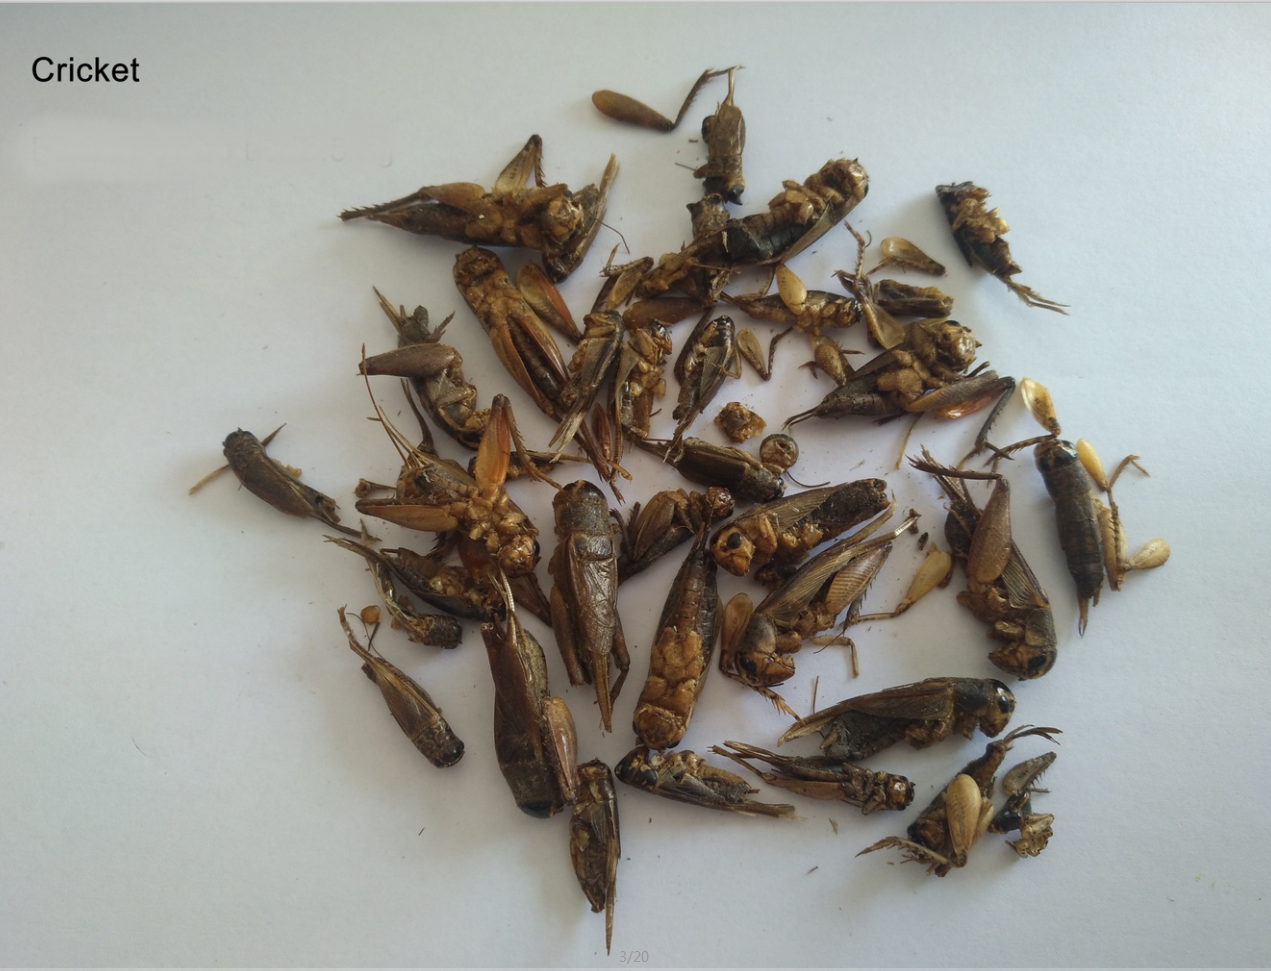 Dried Cricket